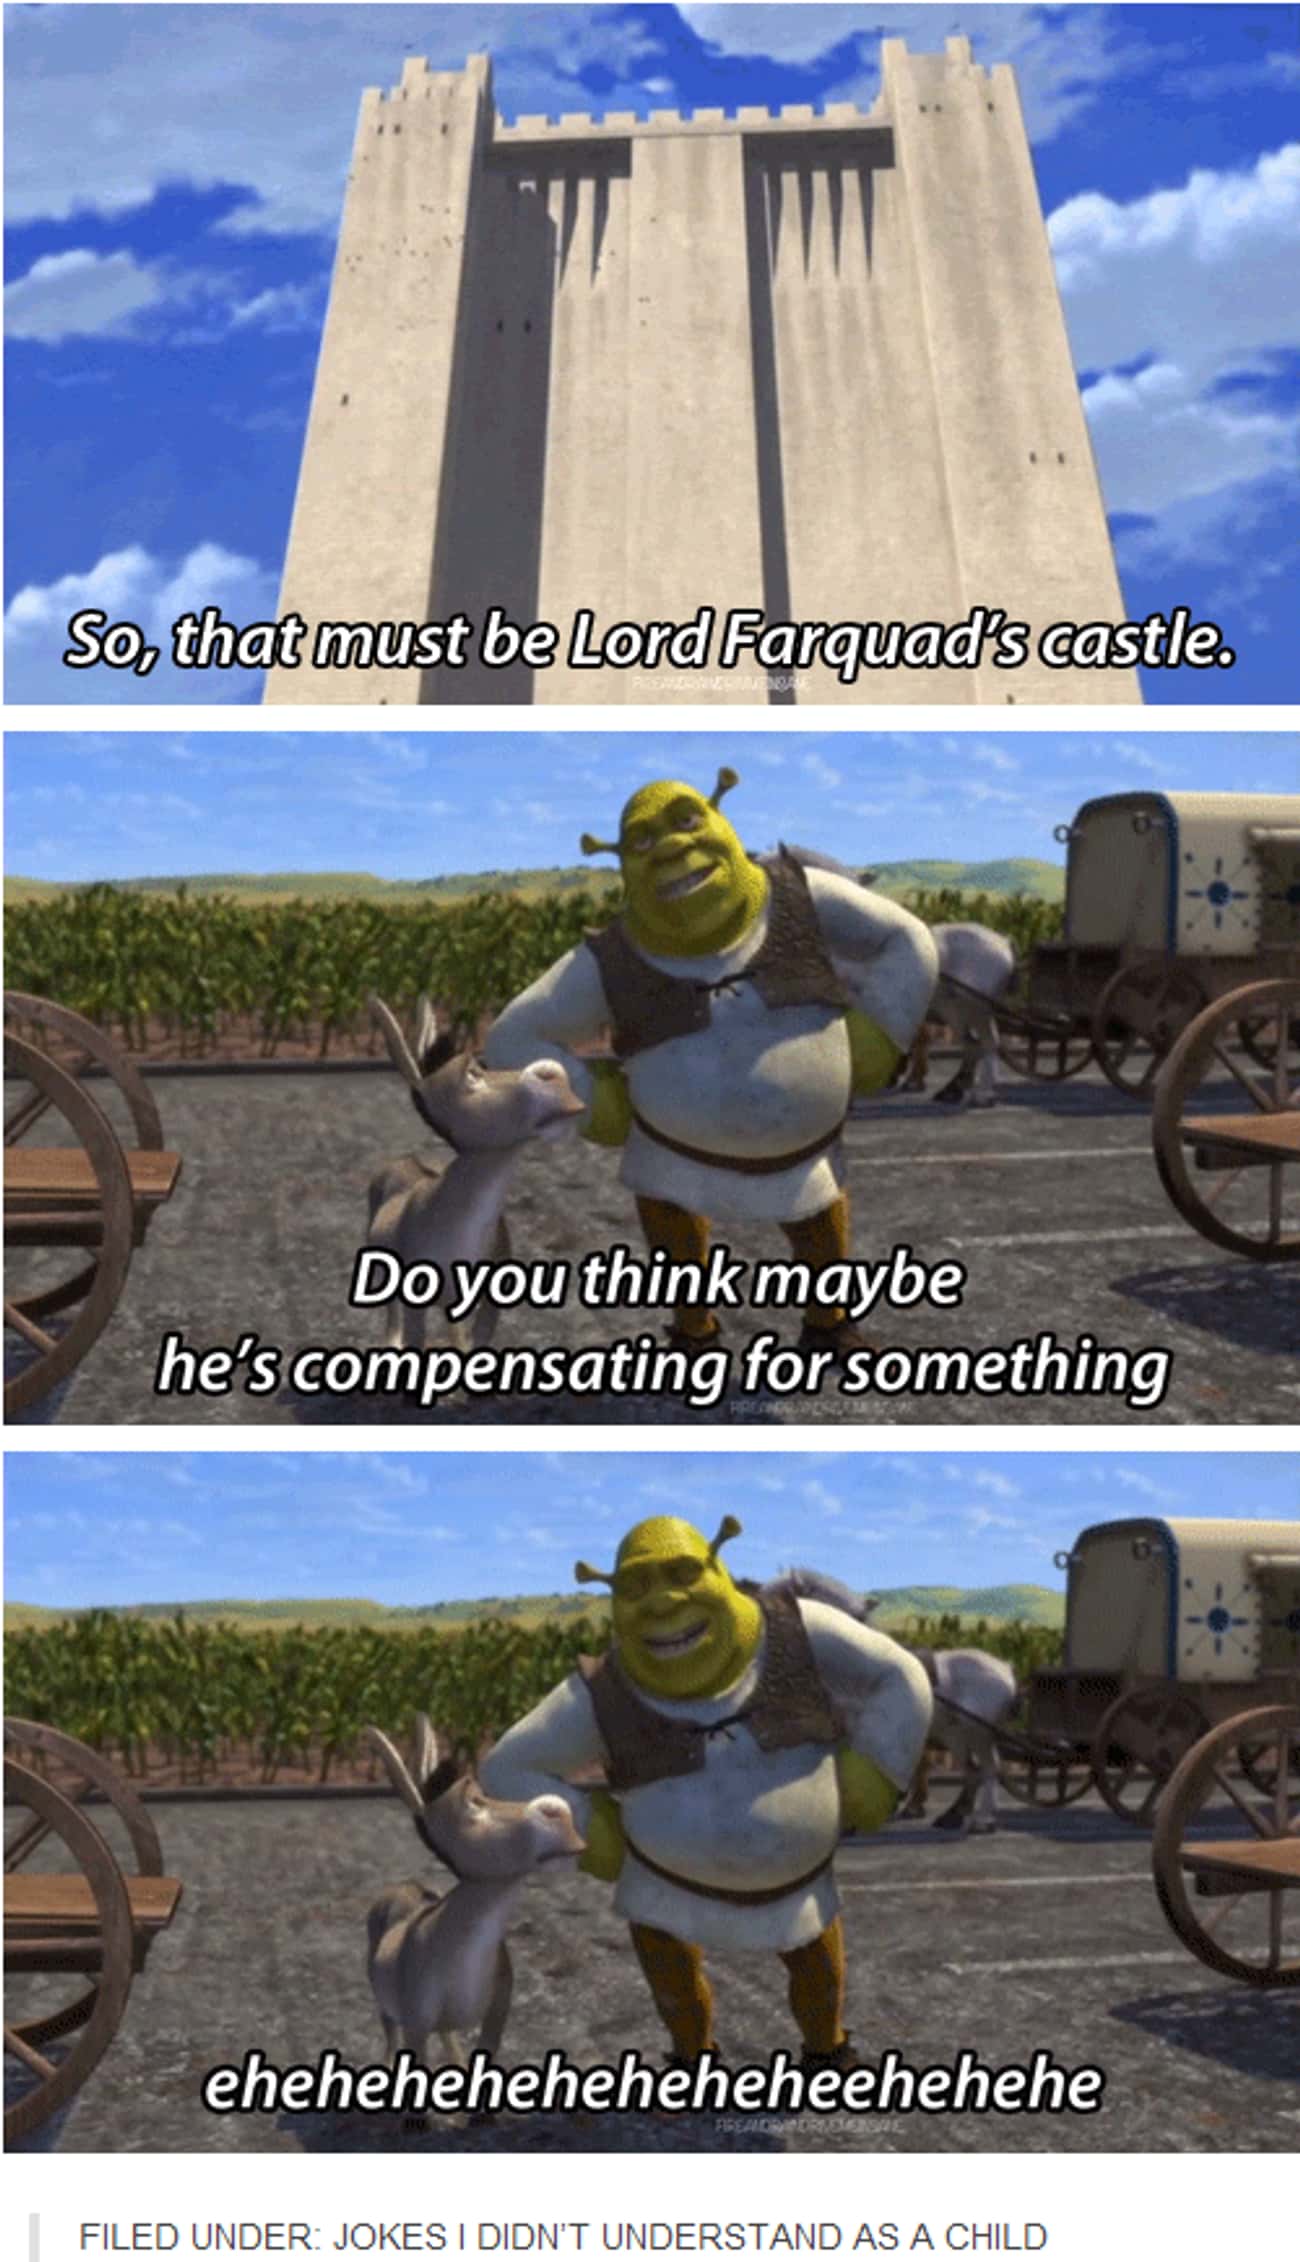 The Classic Dick Joke In 'Shrek'